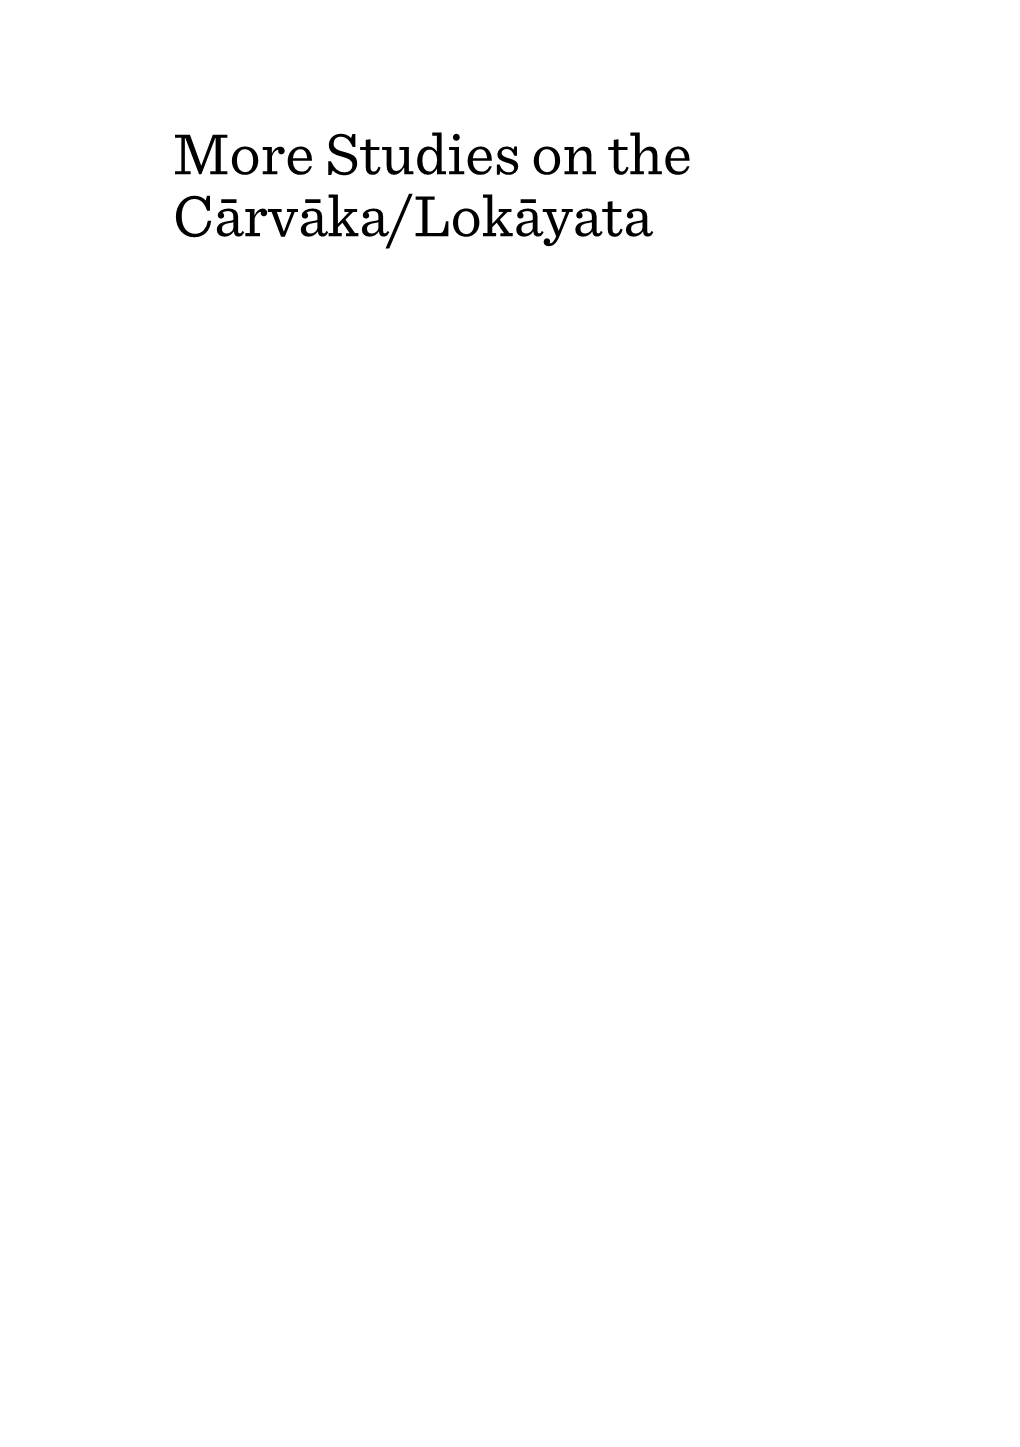 Studies on the Cārvāka/Lokāyata